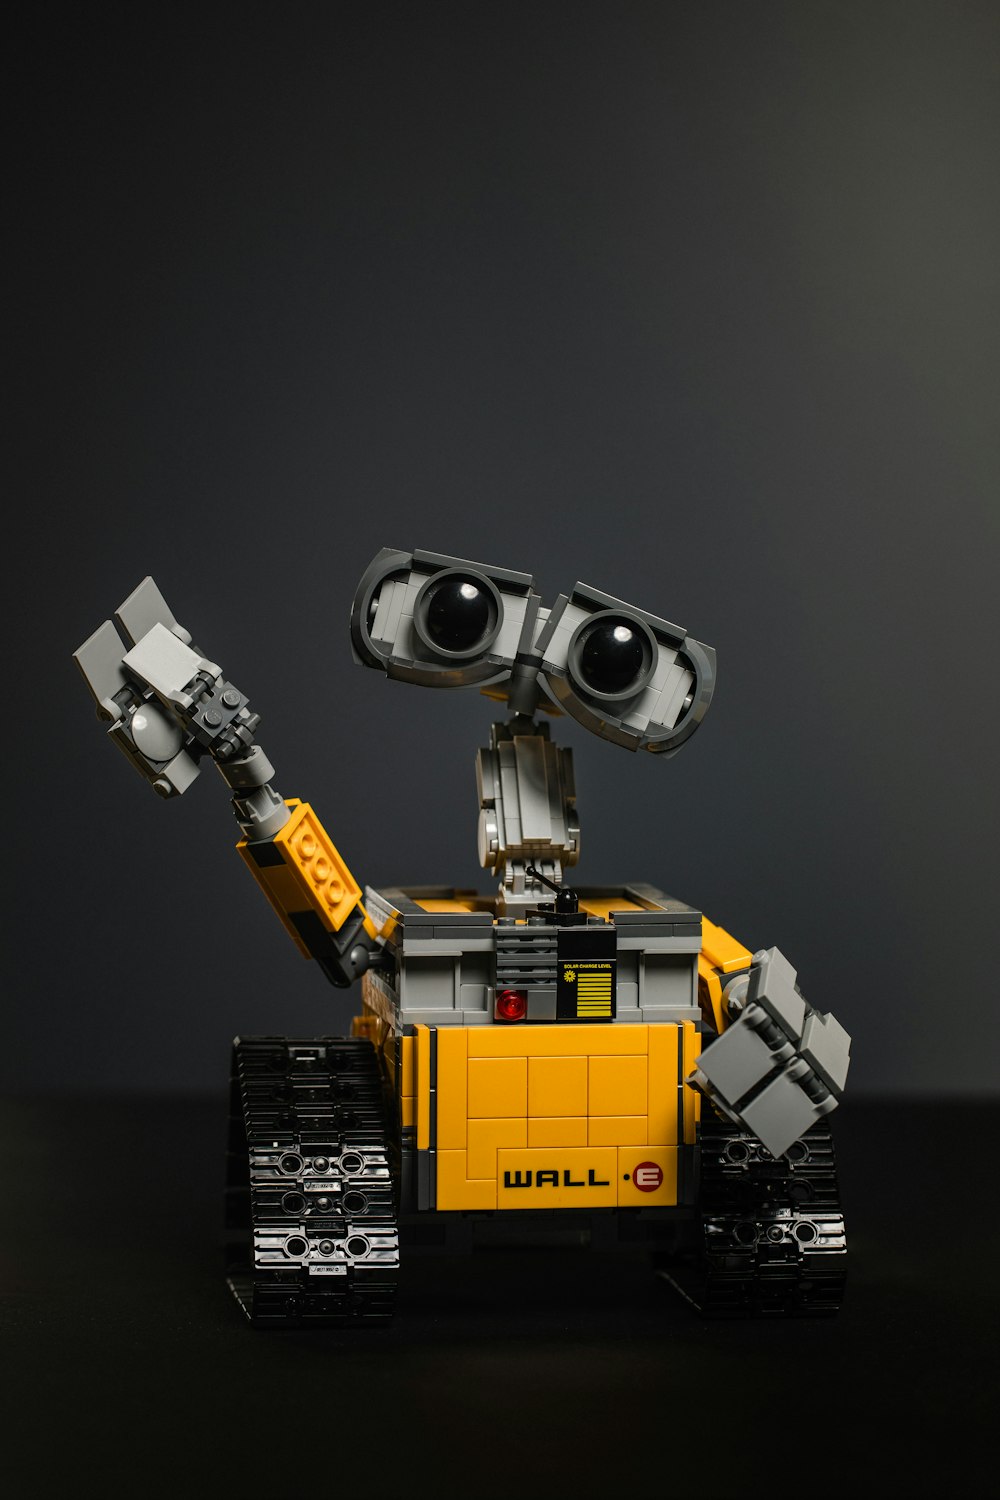 Lego Robot Pictures | Download Free Images on Unsplash